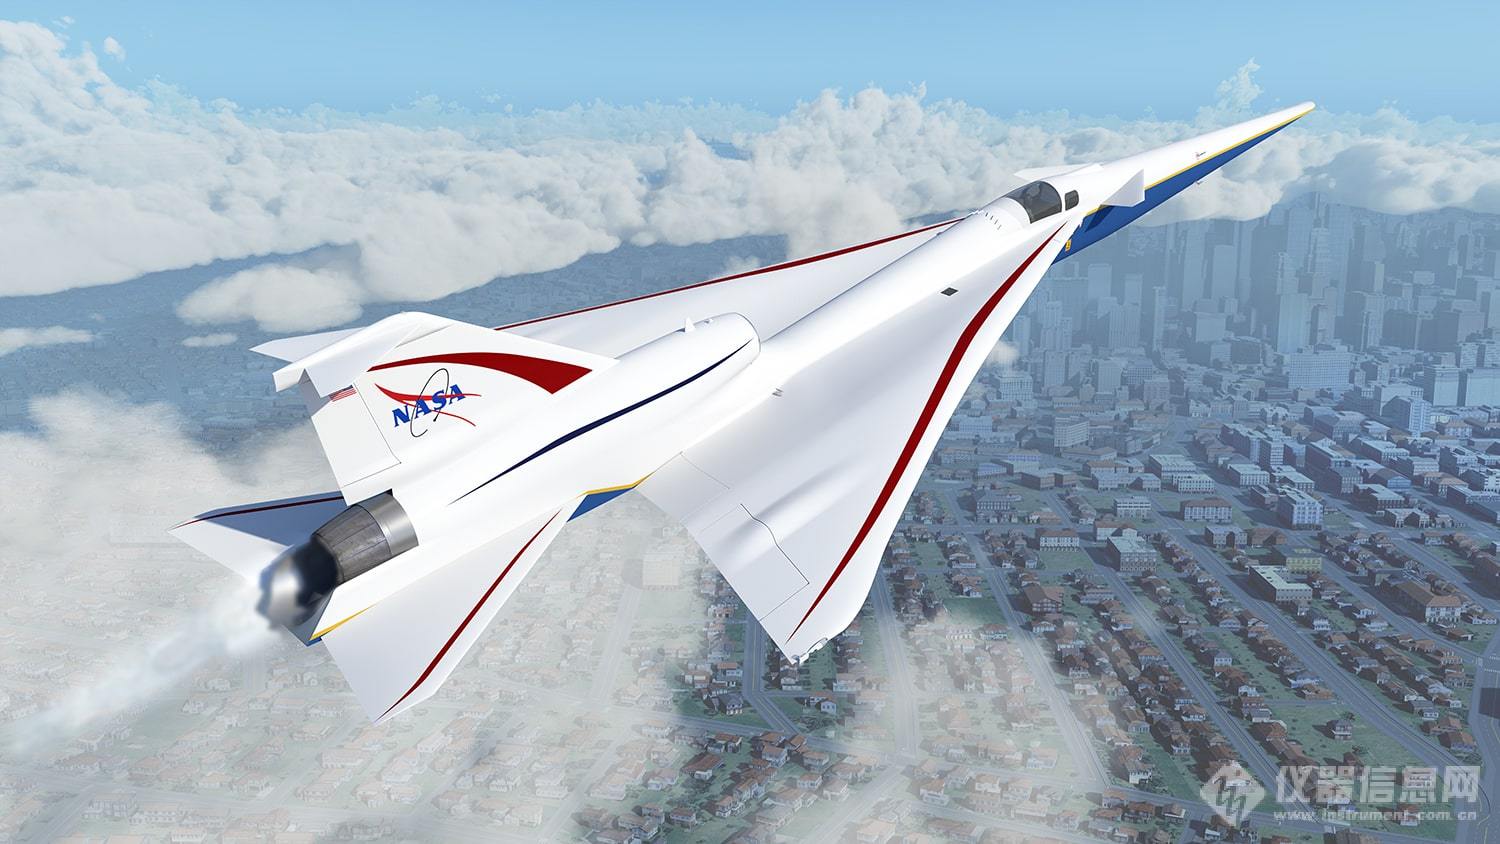 X-59-quiet-supersonic-aircraft-25032021.jpg